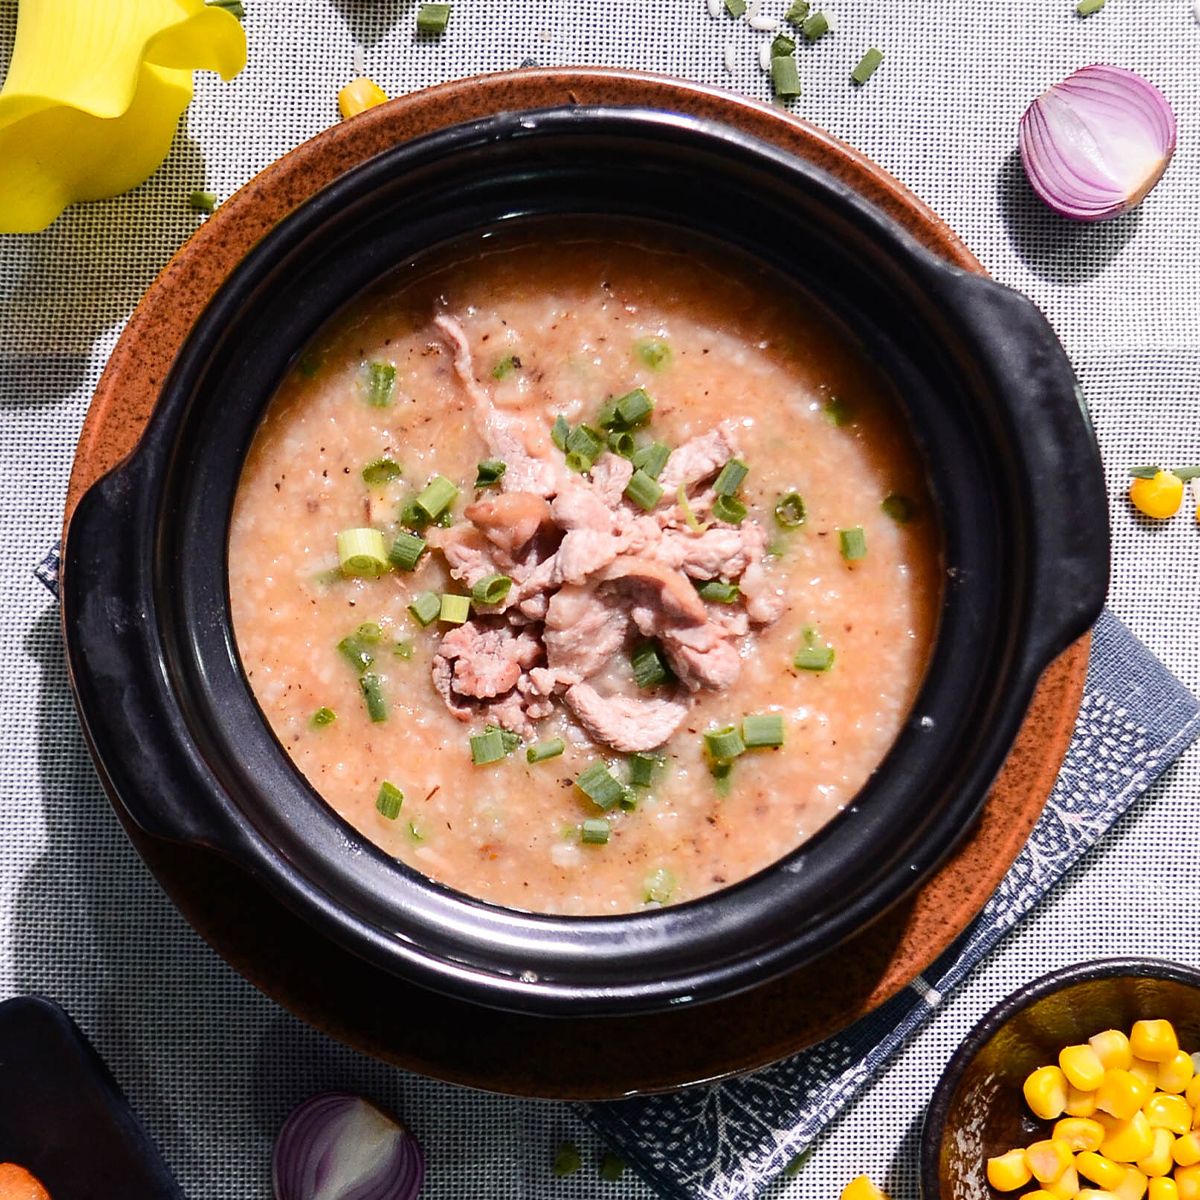  CHÁO THỊT HEO (Rice Porridge With Pork) 